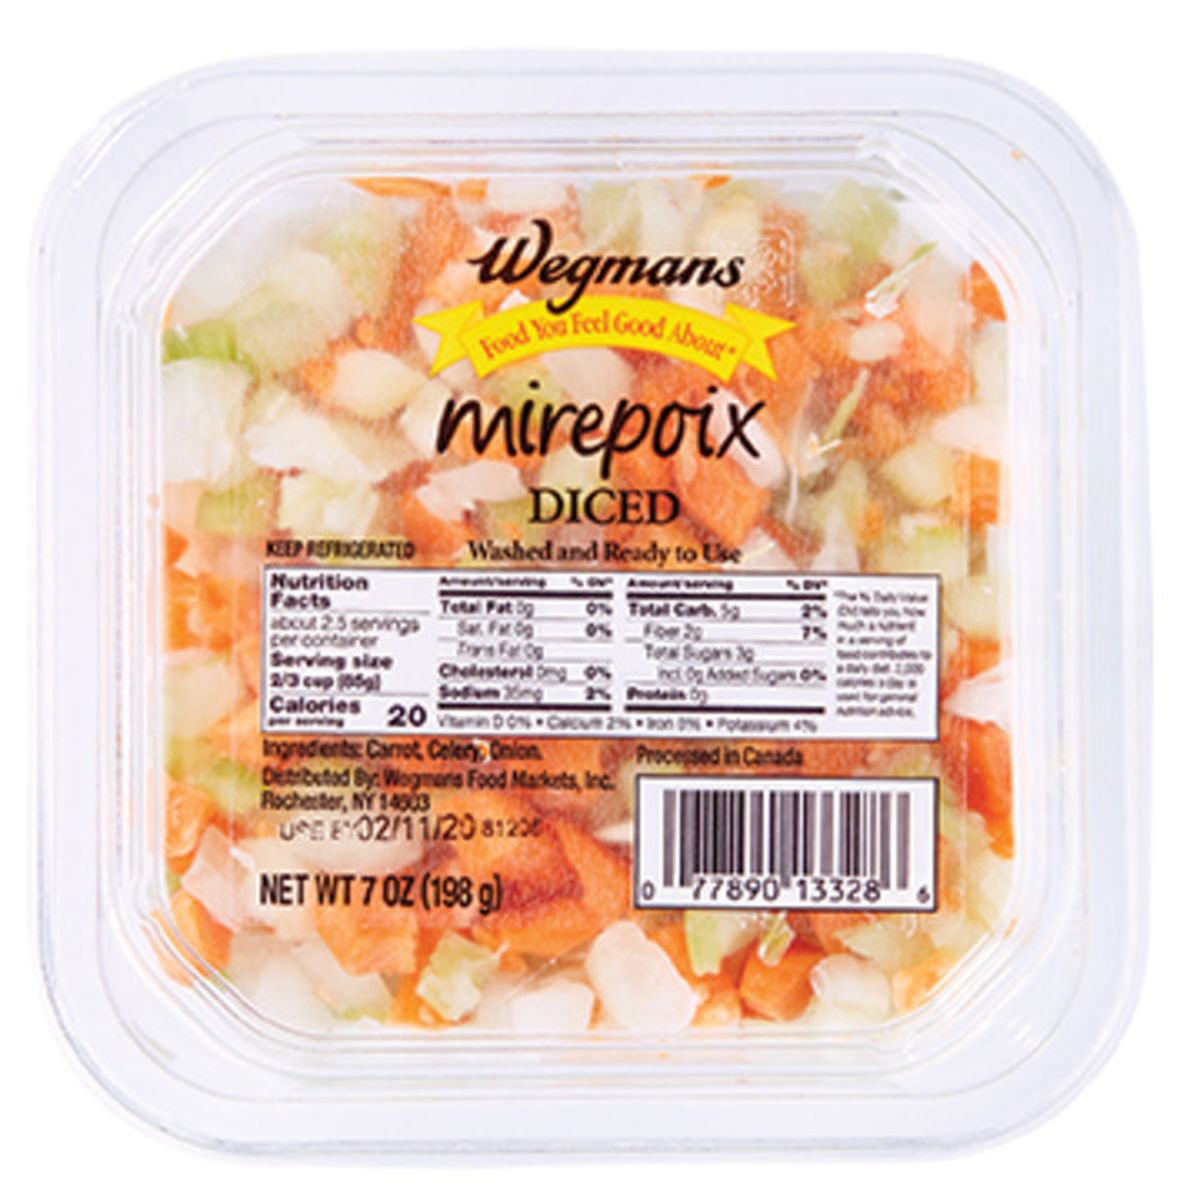 Calories in Wegmans Diced Mirepoix